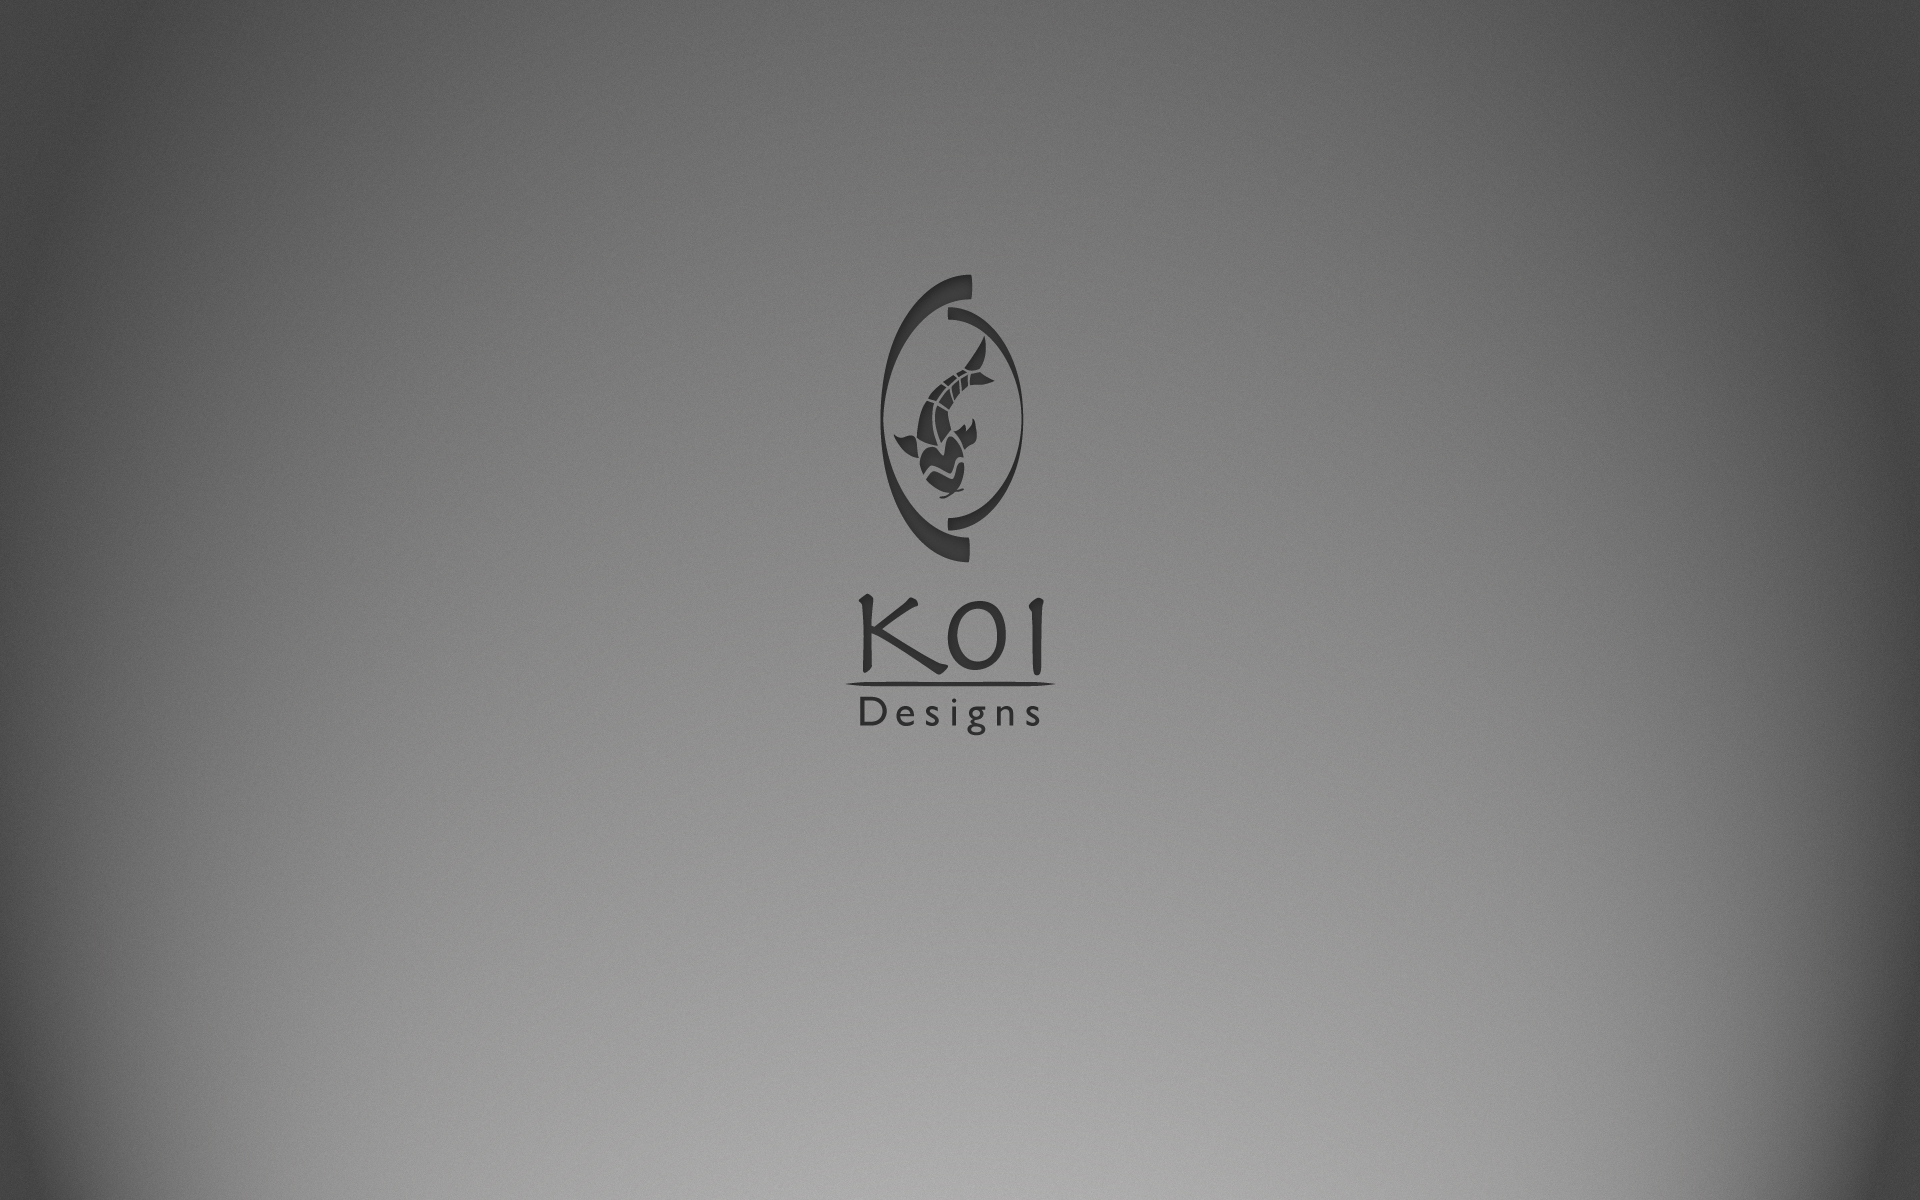 Wallpaper Designs Koi